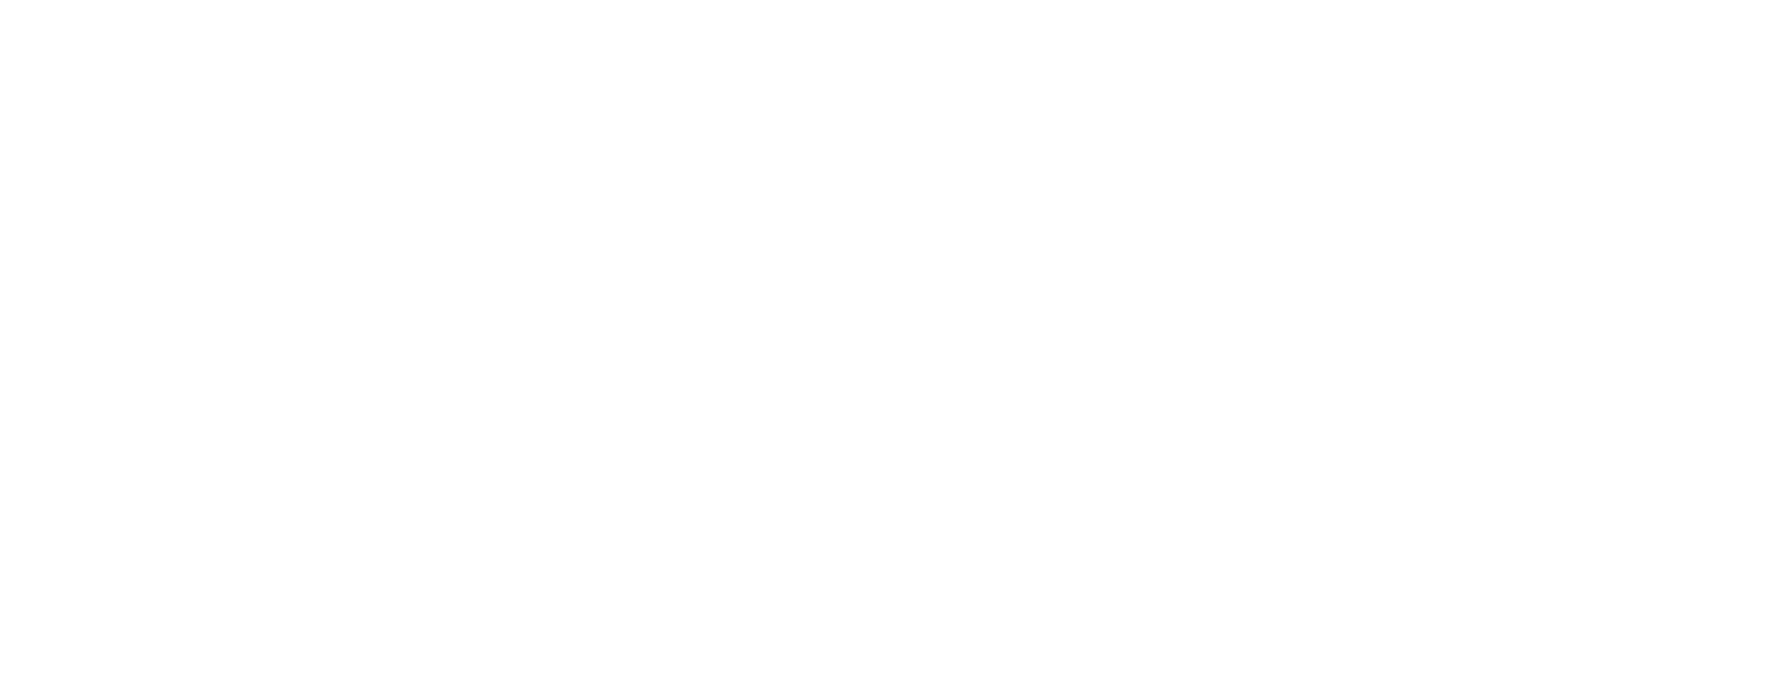 Dead Rabbit Logo - The Story - The Dead Rabbit Irish Whiskey